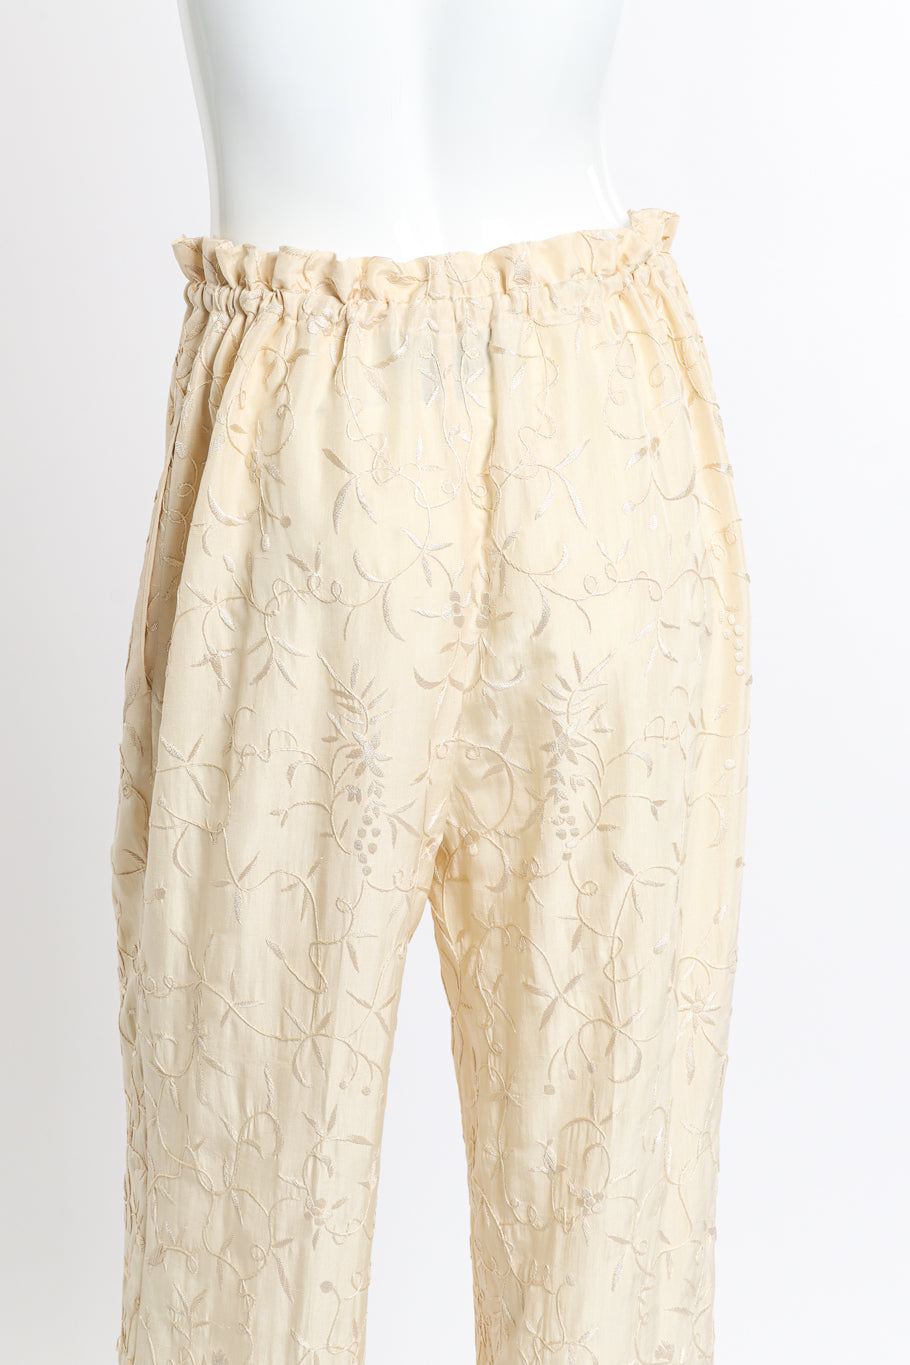 Vintage Donna Karan Embroidered Top & Pant Set pant back on mannequin closeup @recess la